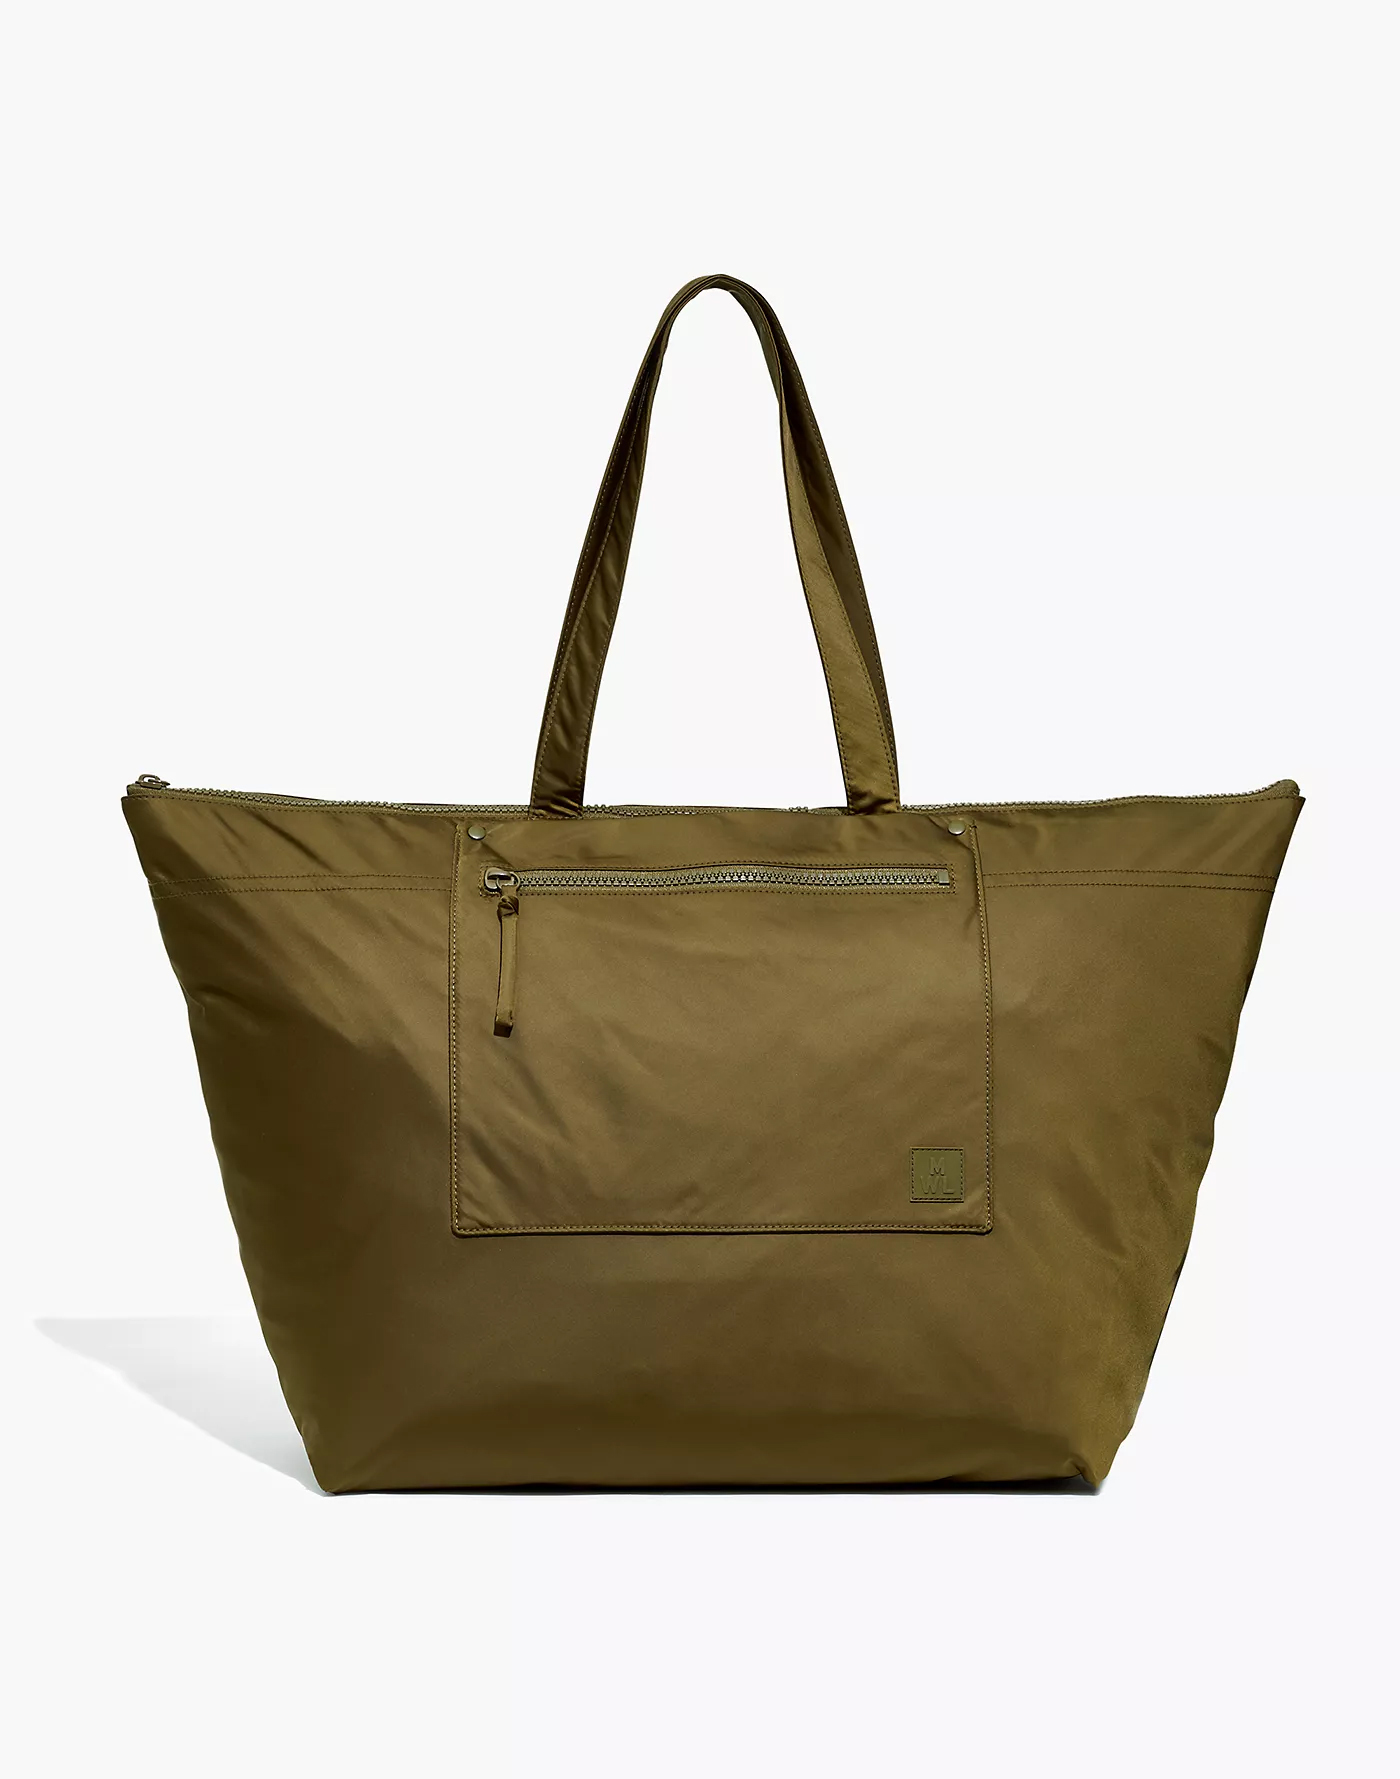 11 Best Tote Bags For Women: Cute Tote BagsHelloGiggles